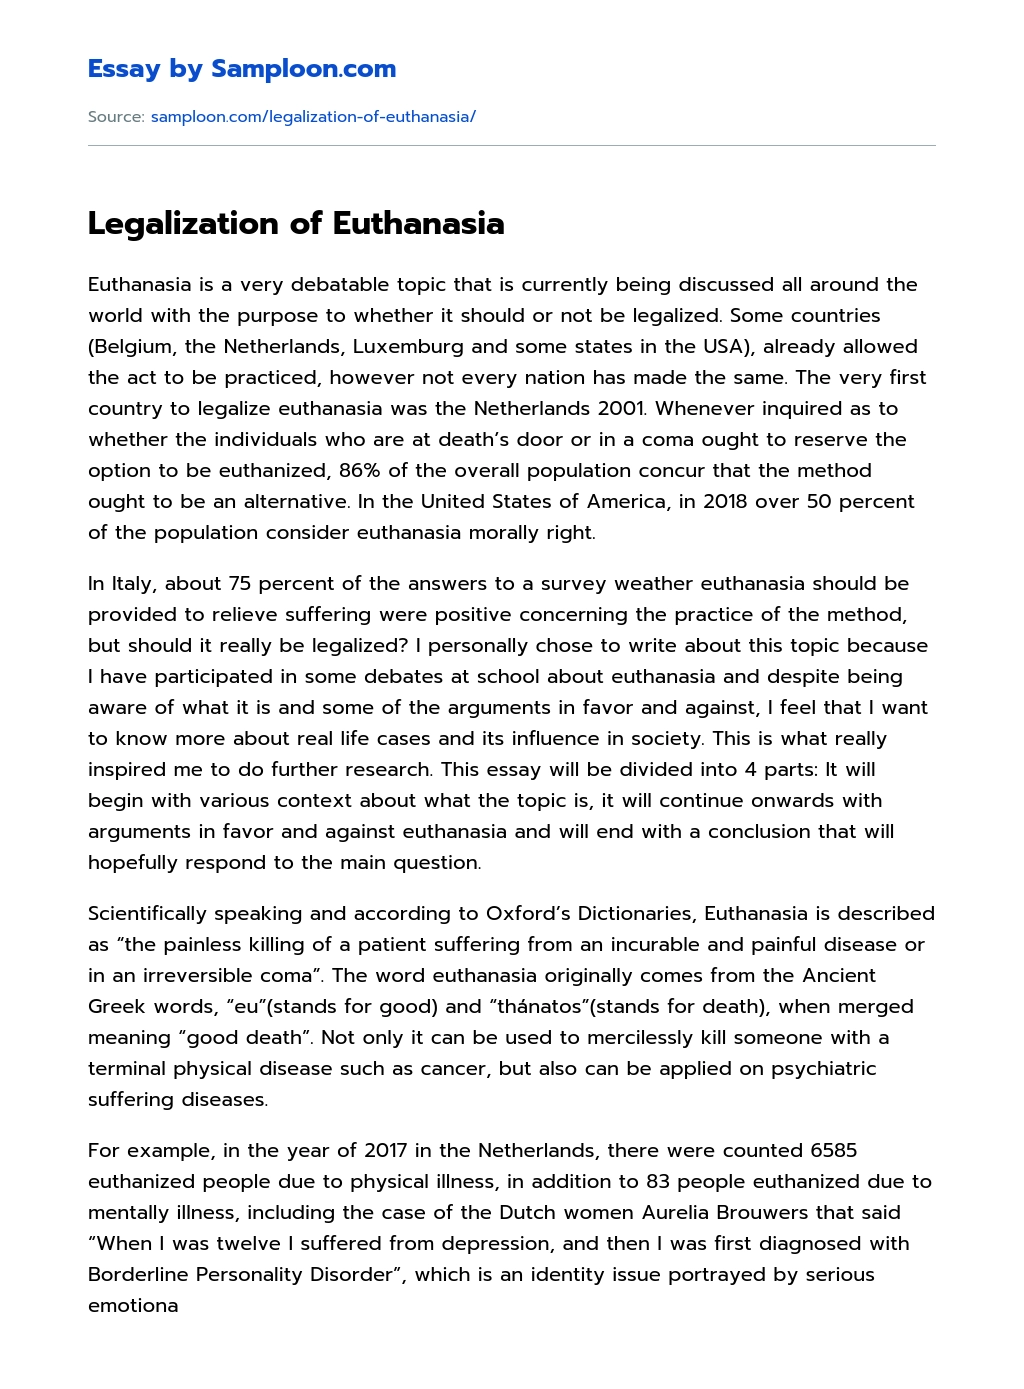 Legalization of Euthanasia essay